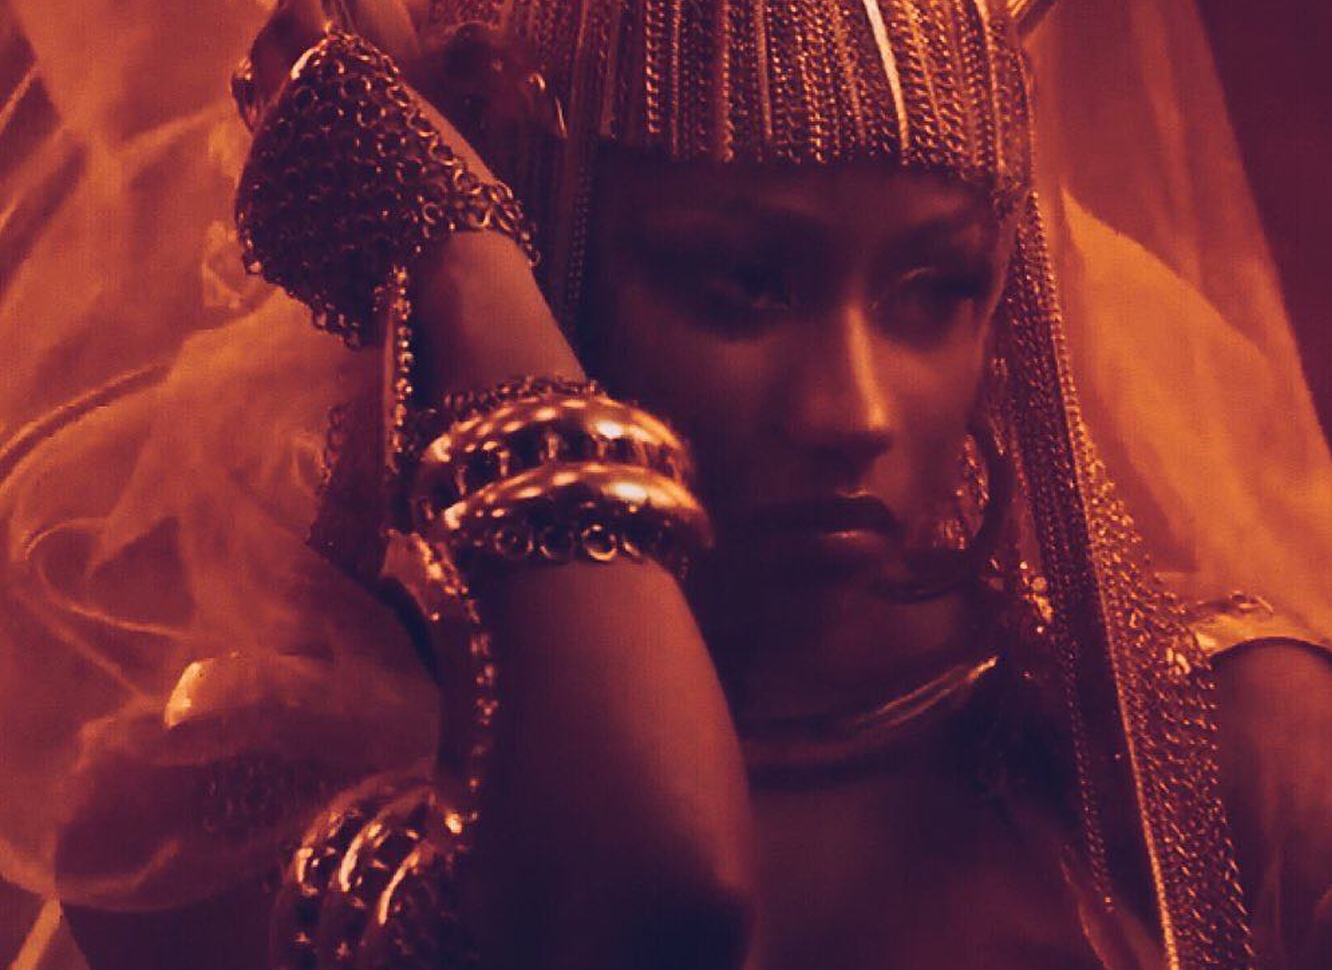  Nicki Minaj suspende también su show de Burdeos y la gente grita: «¡Cardi B, Cardi B, Cardi B!»